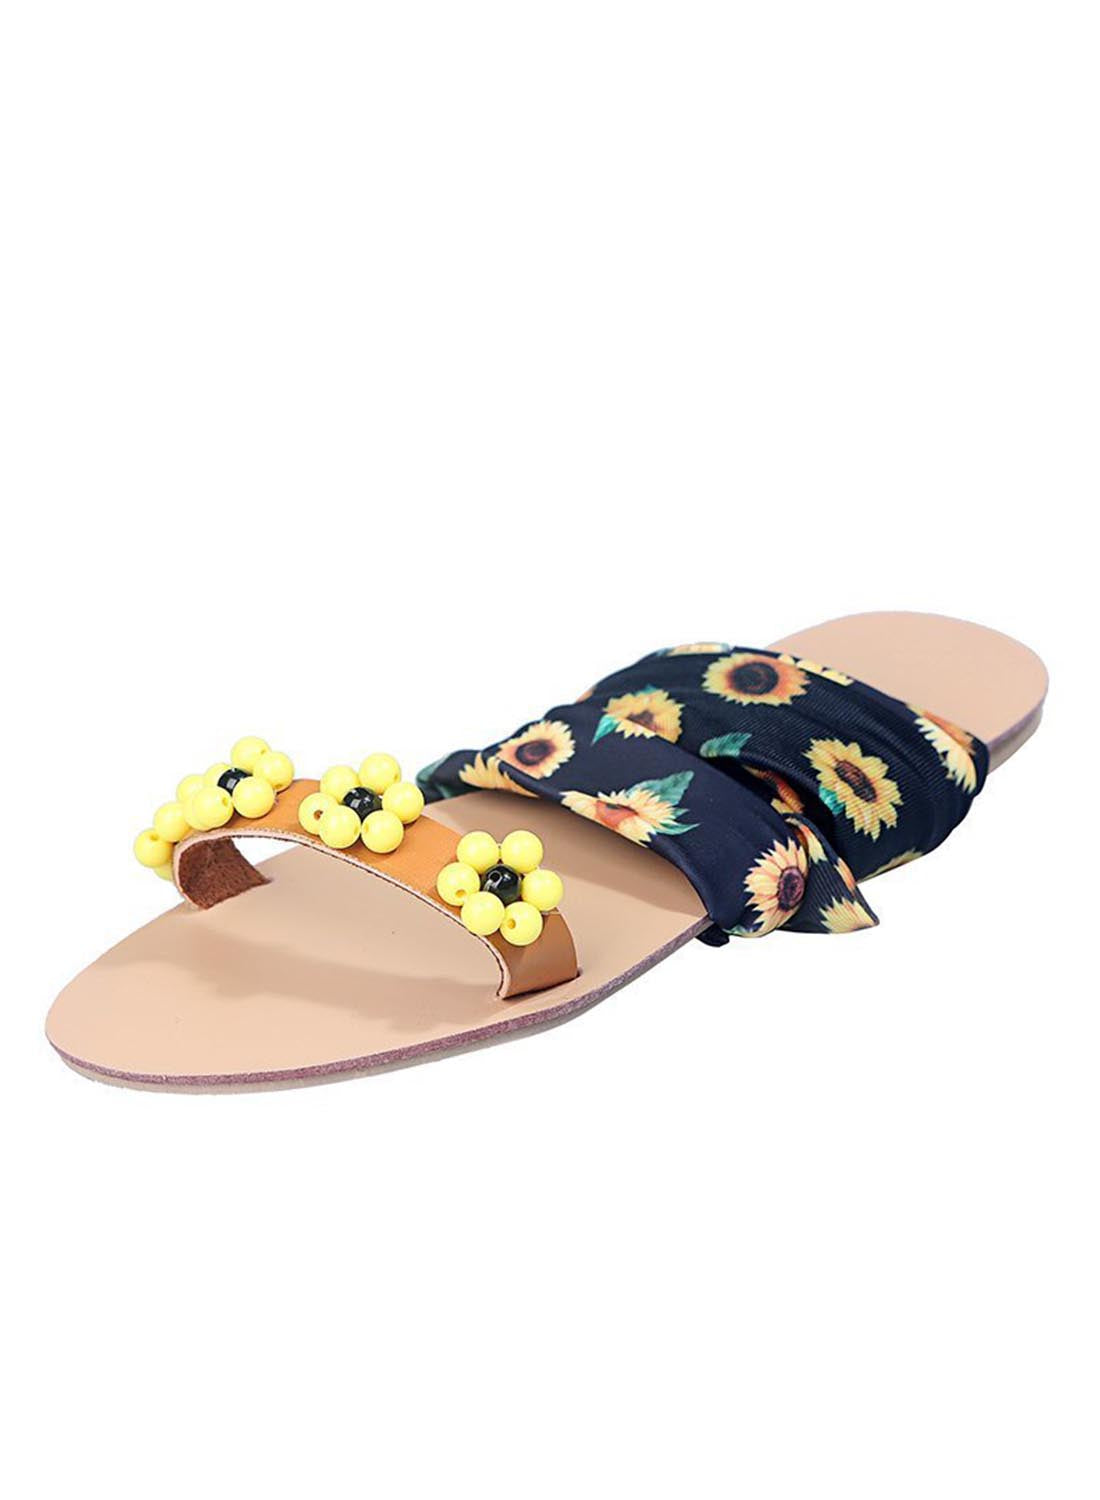 Black Women's Sandals Sunflower Print Cross Bow Tied Sandals LC121465-2